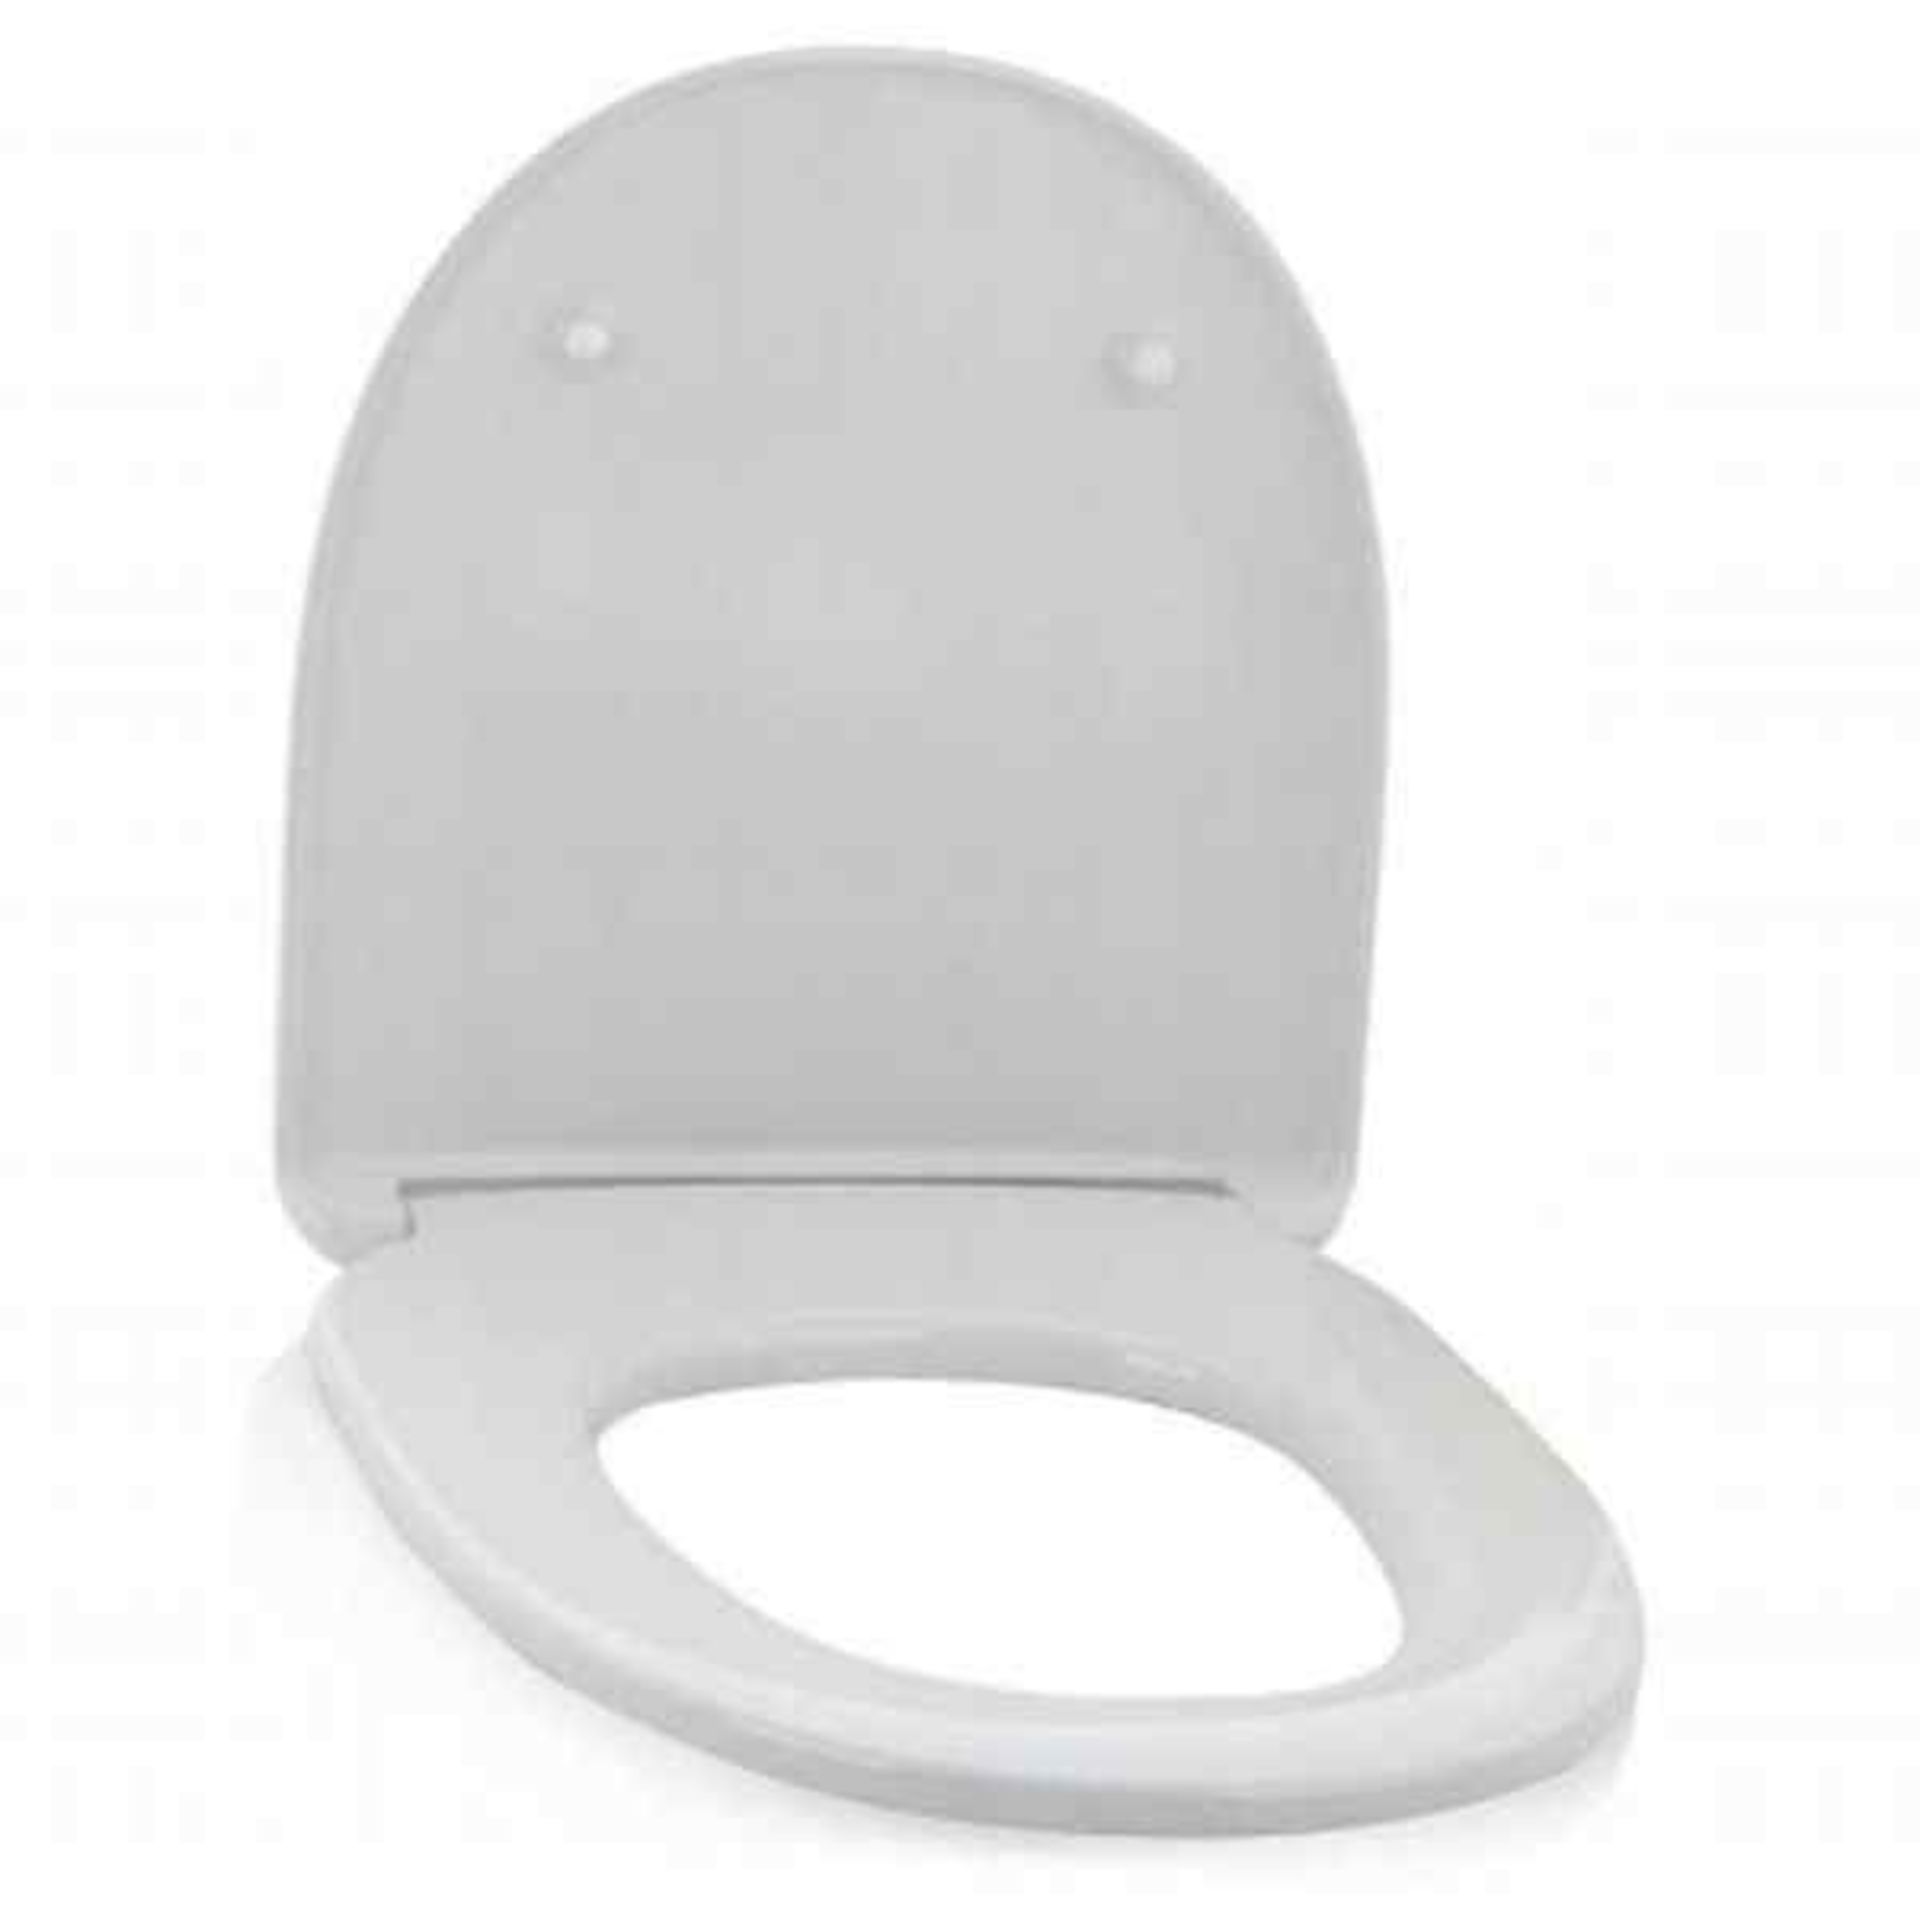 ZZ-LEC-STWHSSUNP - Lecico Universal Toilet Seat with SS Hinge - White. ...